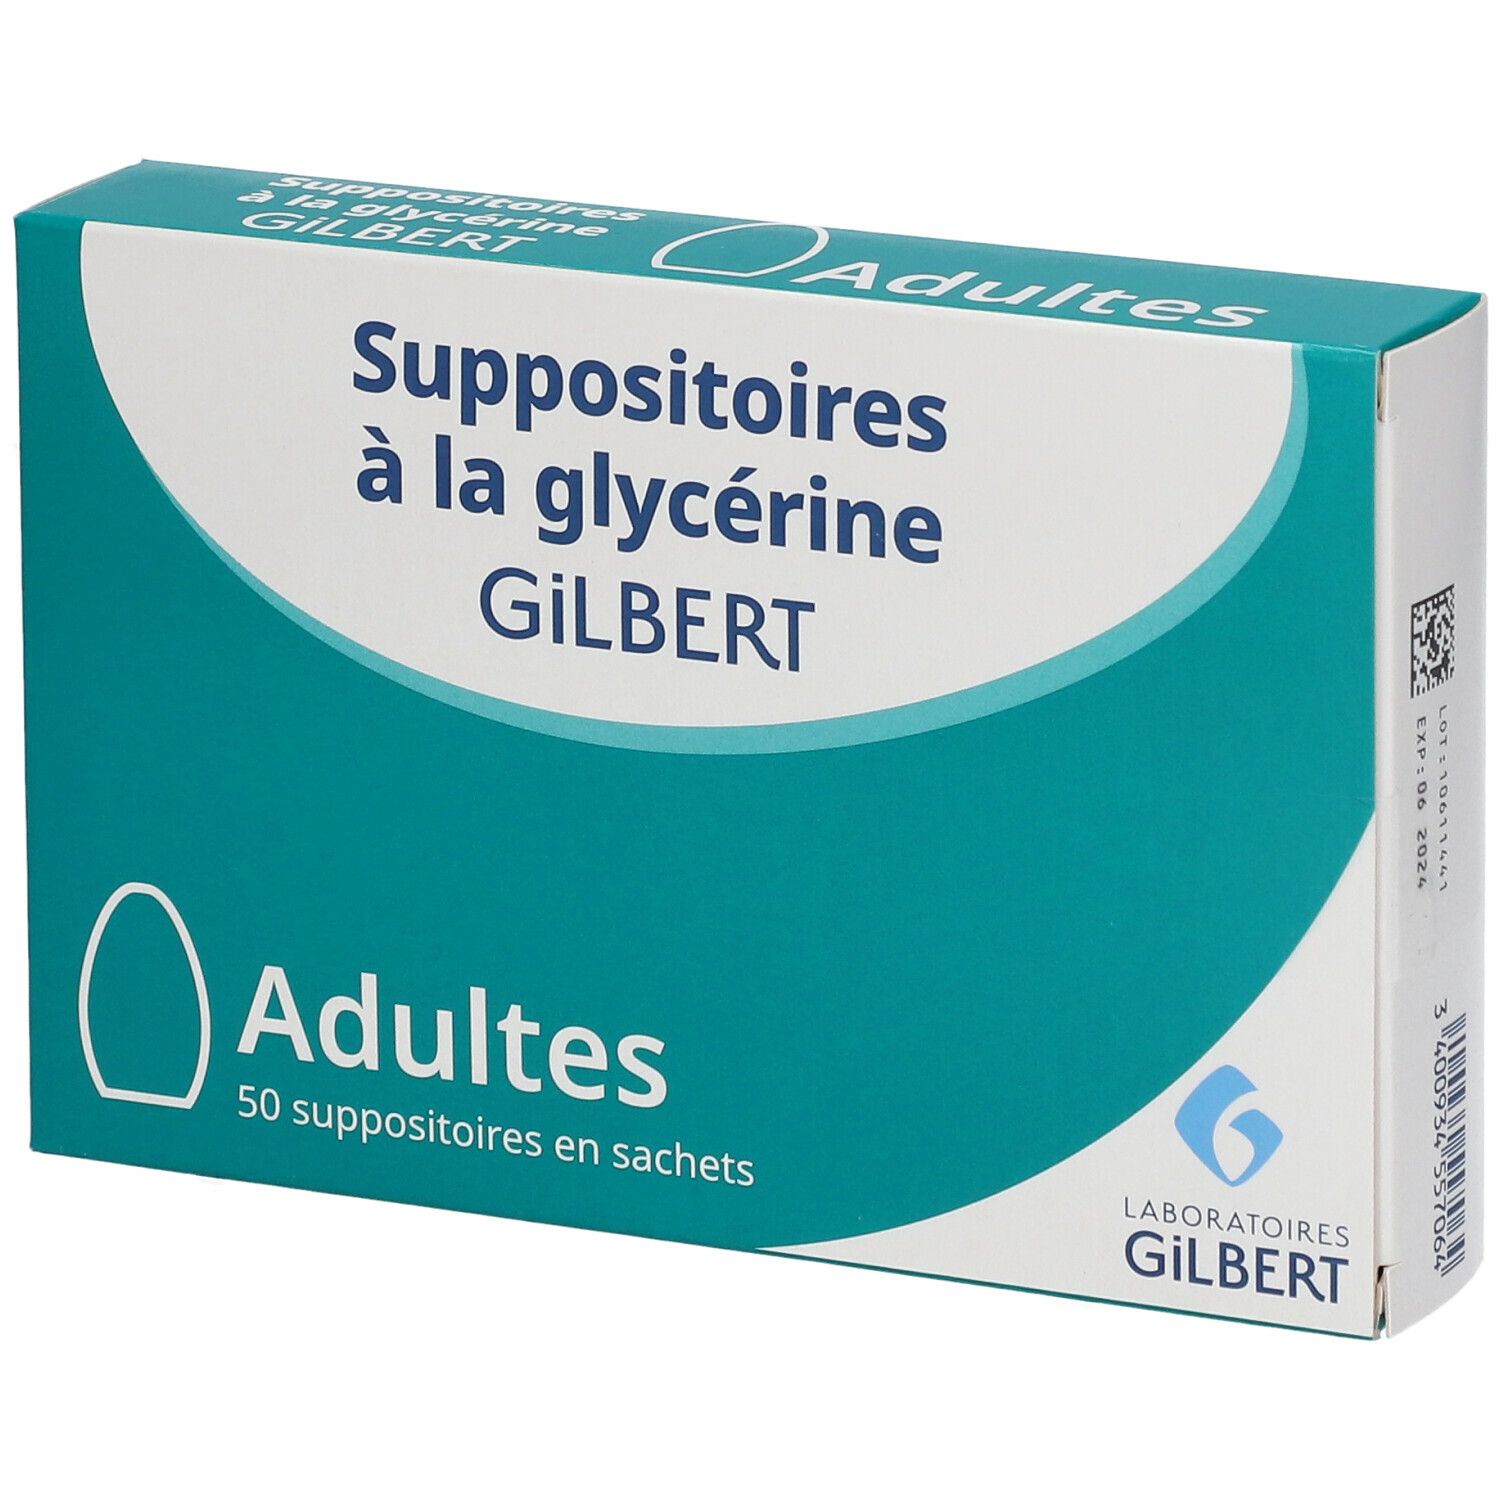 Gilbert Suppositoires à la glycérine